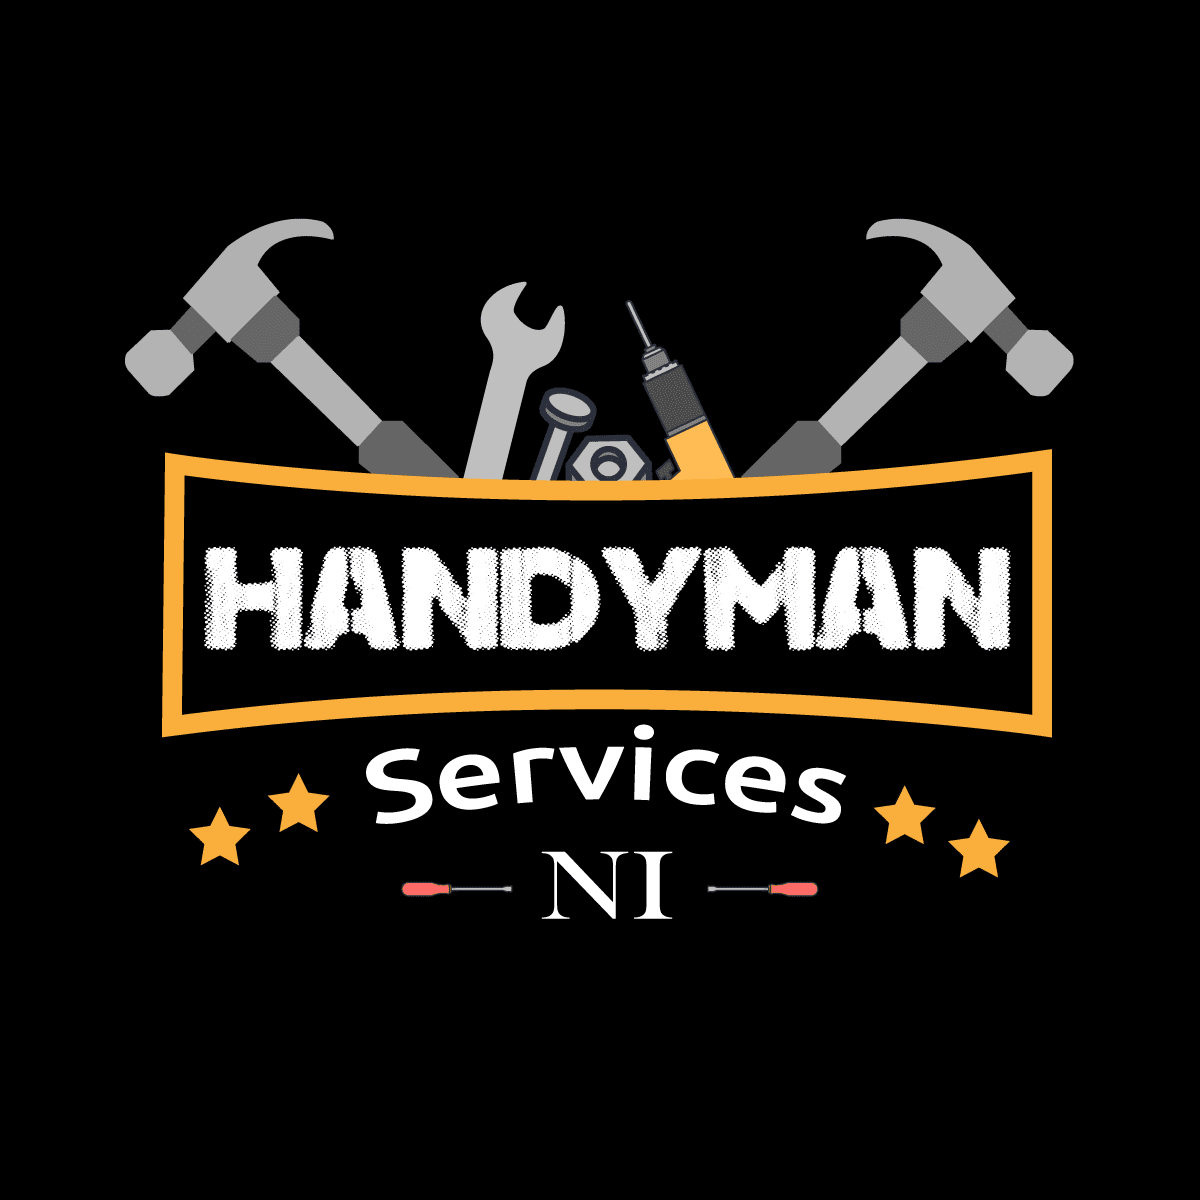 Handyman Services Ni